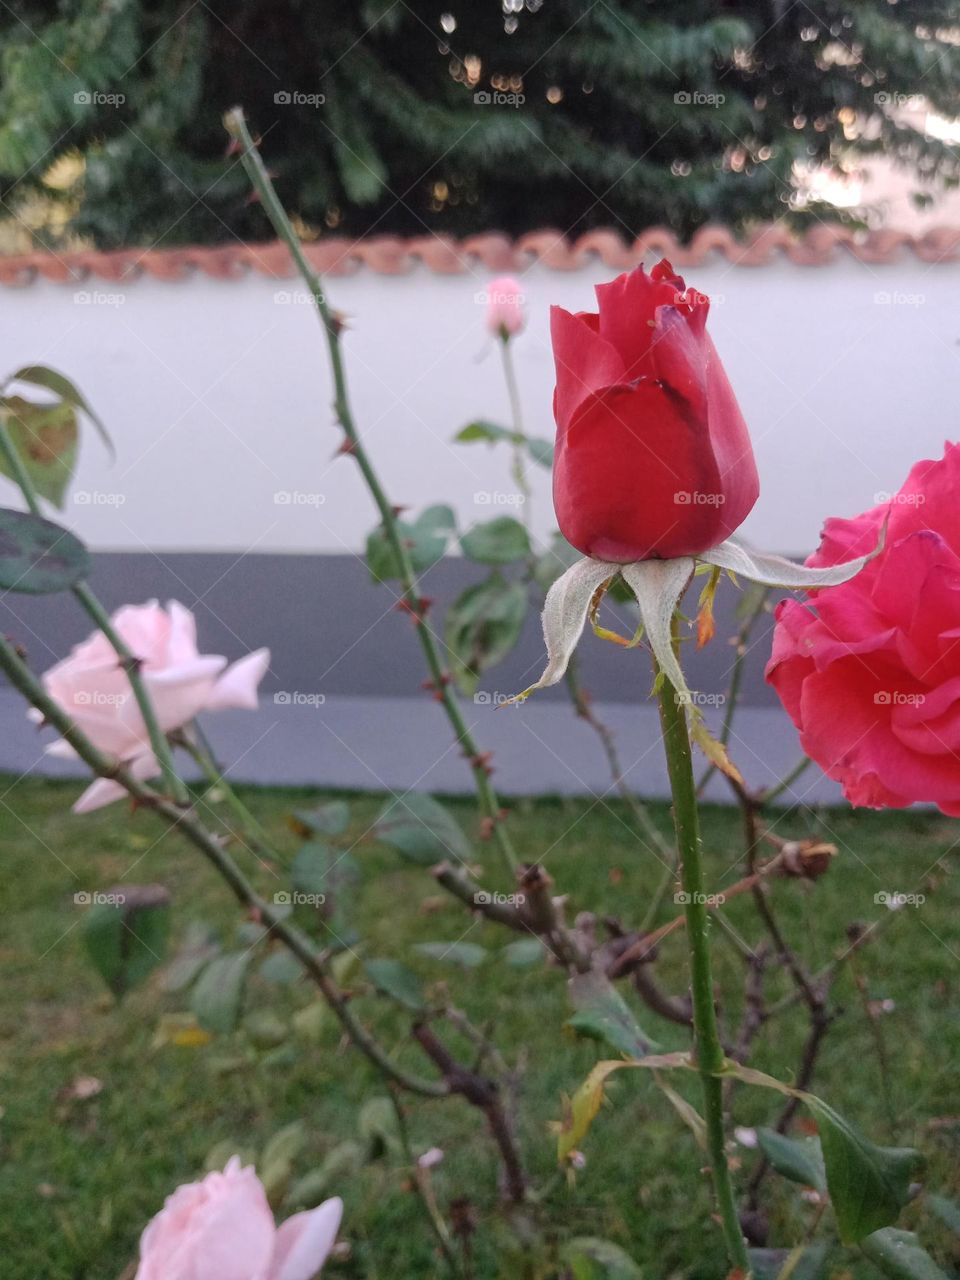 Roses in a house garden, city life